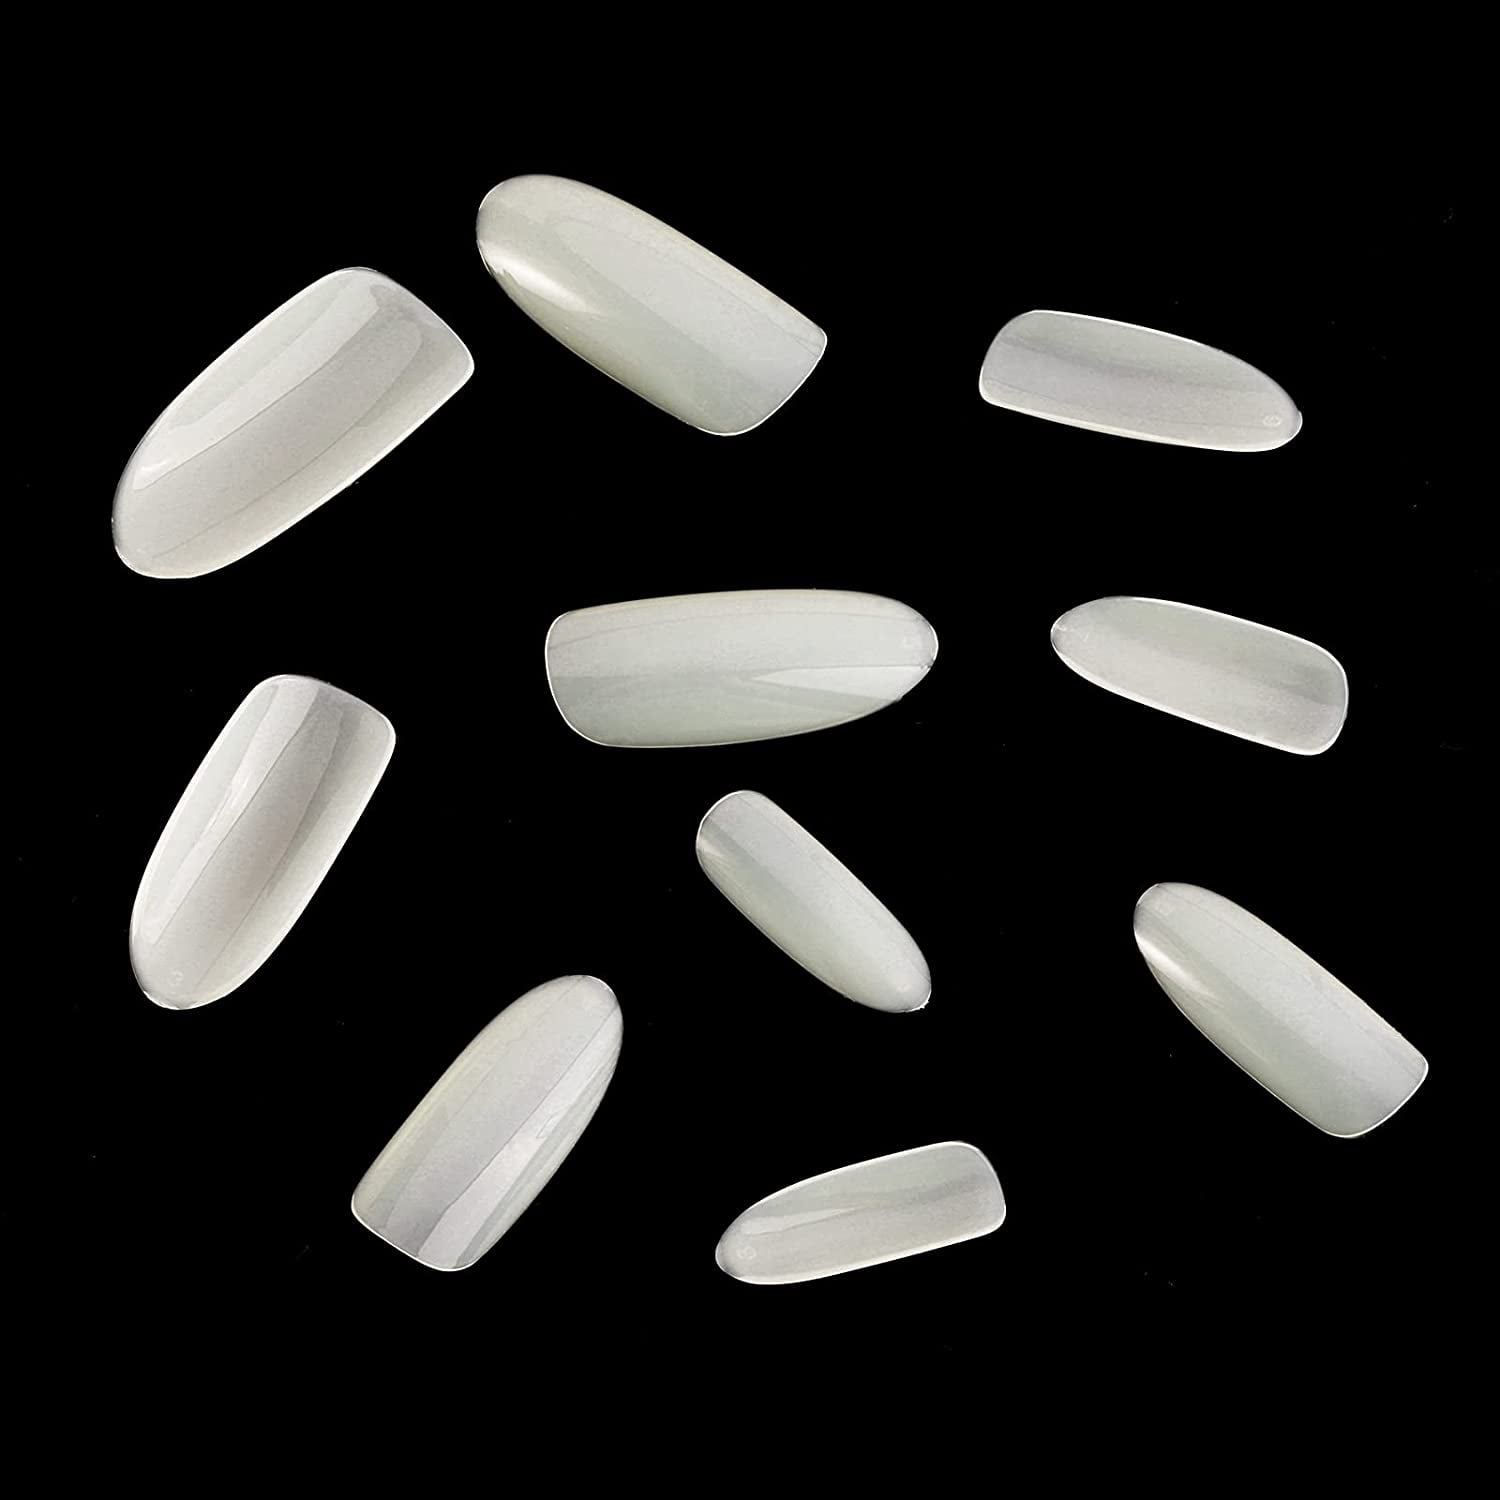 Almond Fake Nail Tips - 500PCS Medium Almond Shaped Clear Acrylic